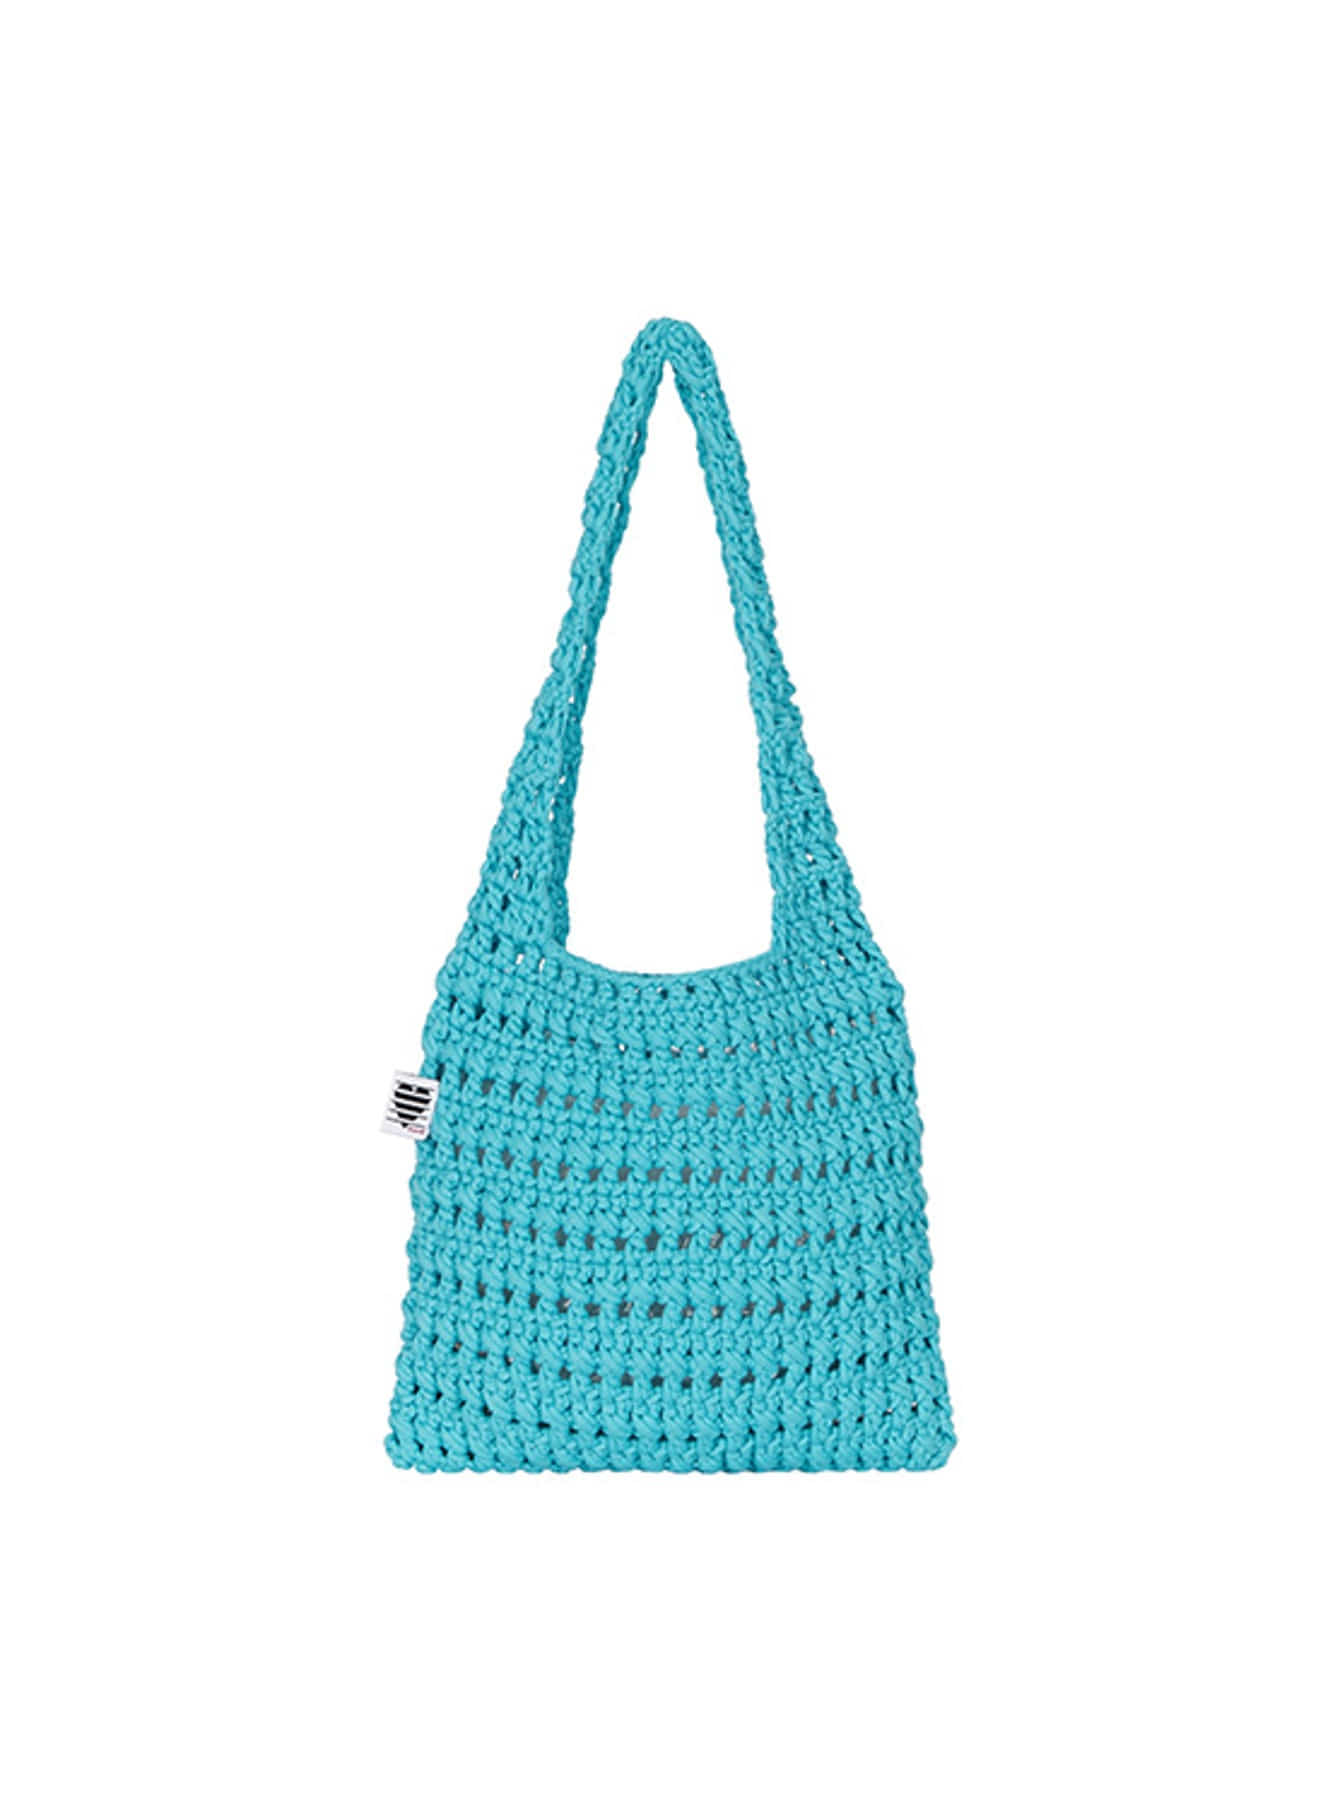 Heart Knit Bag in Blue VX3MG310-22